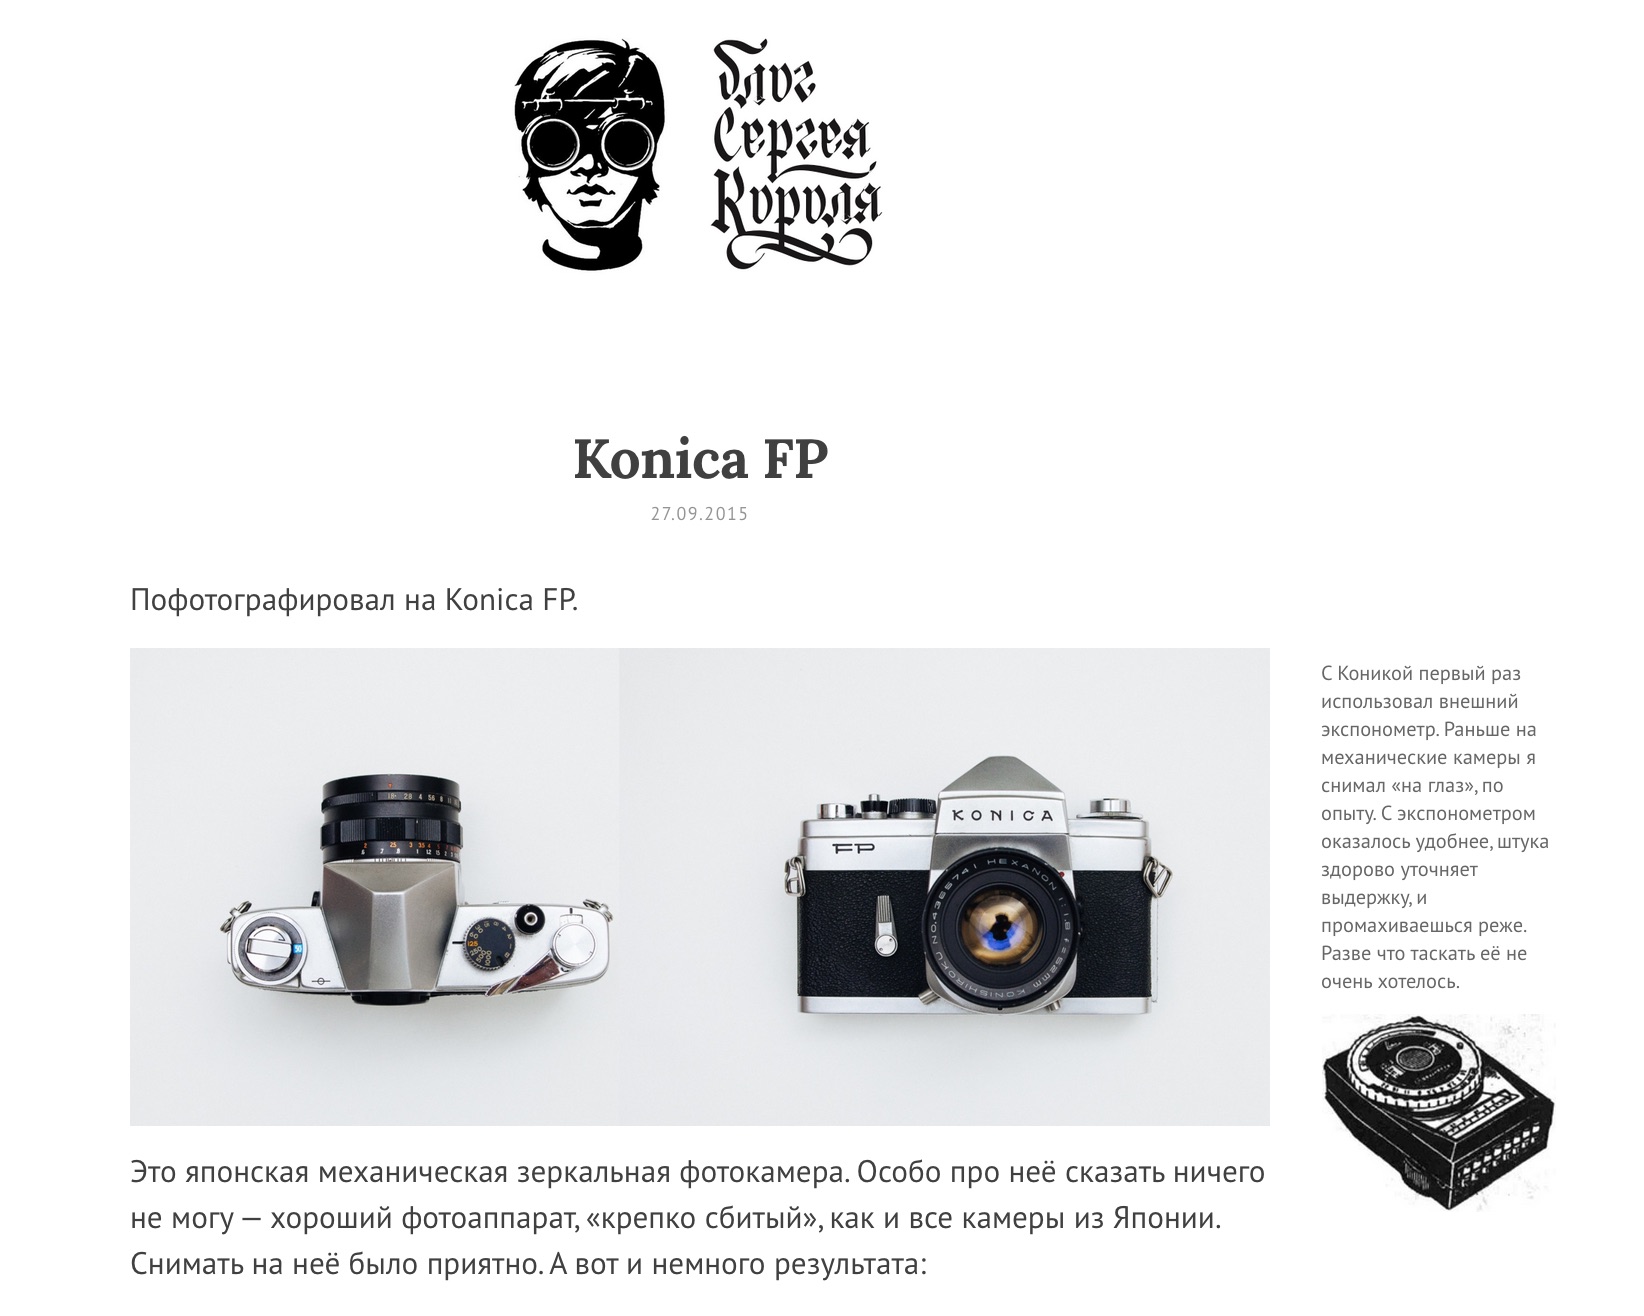 Blog post about Konica FP vintage photo camera